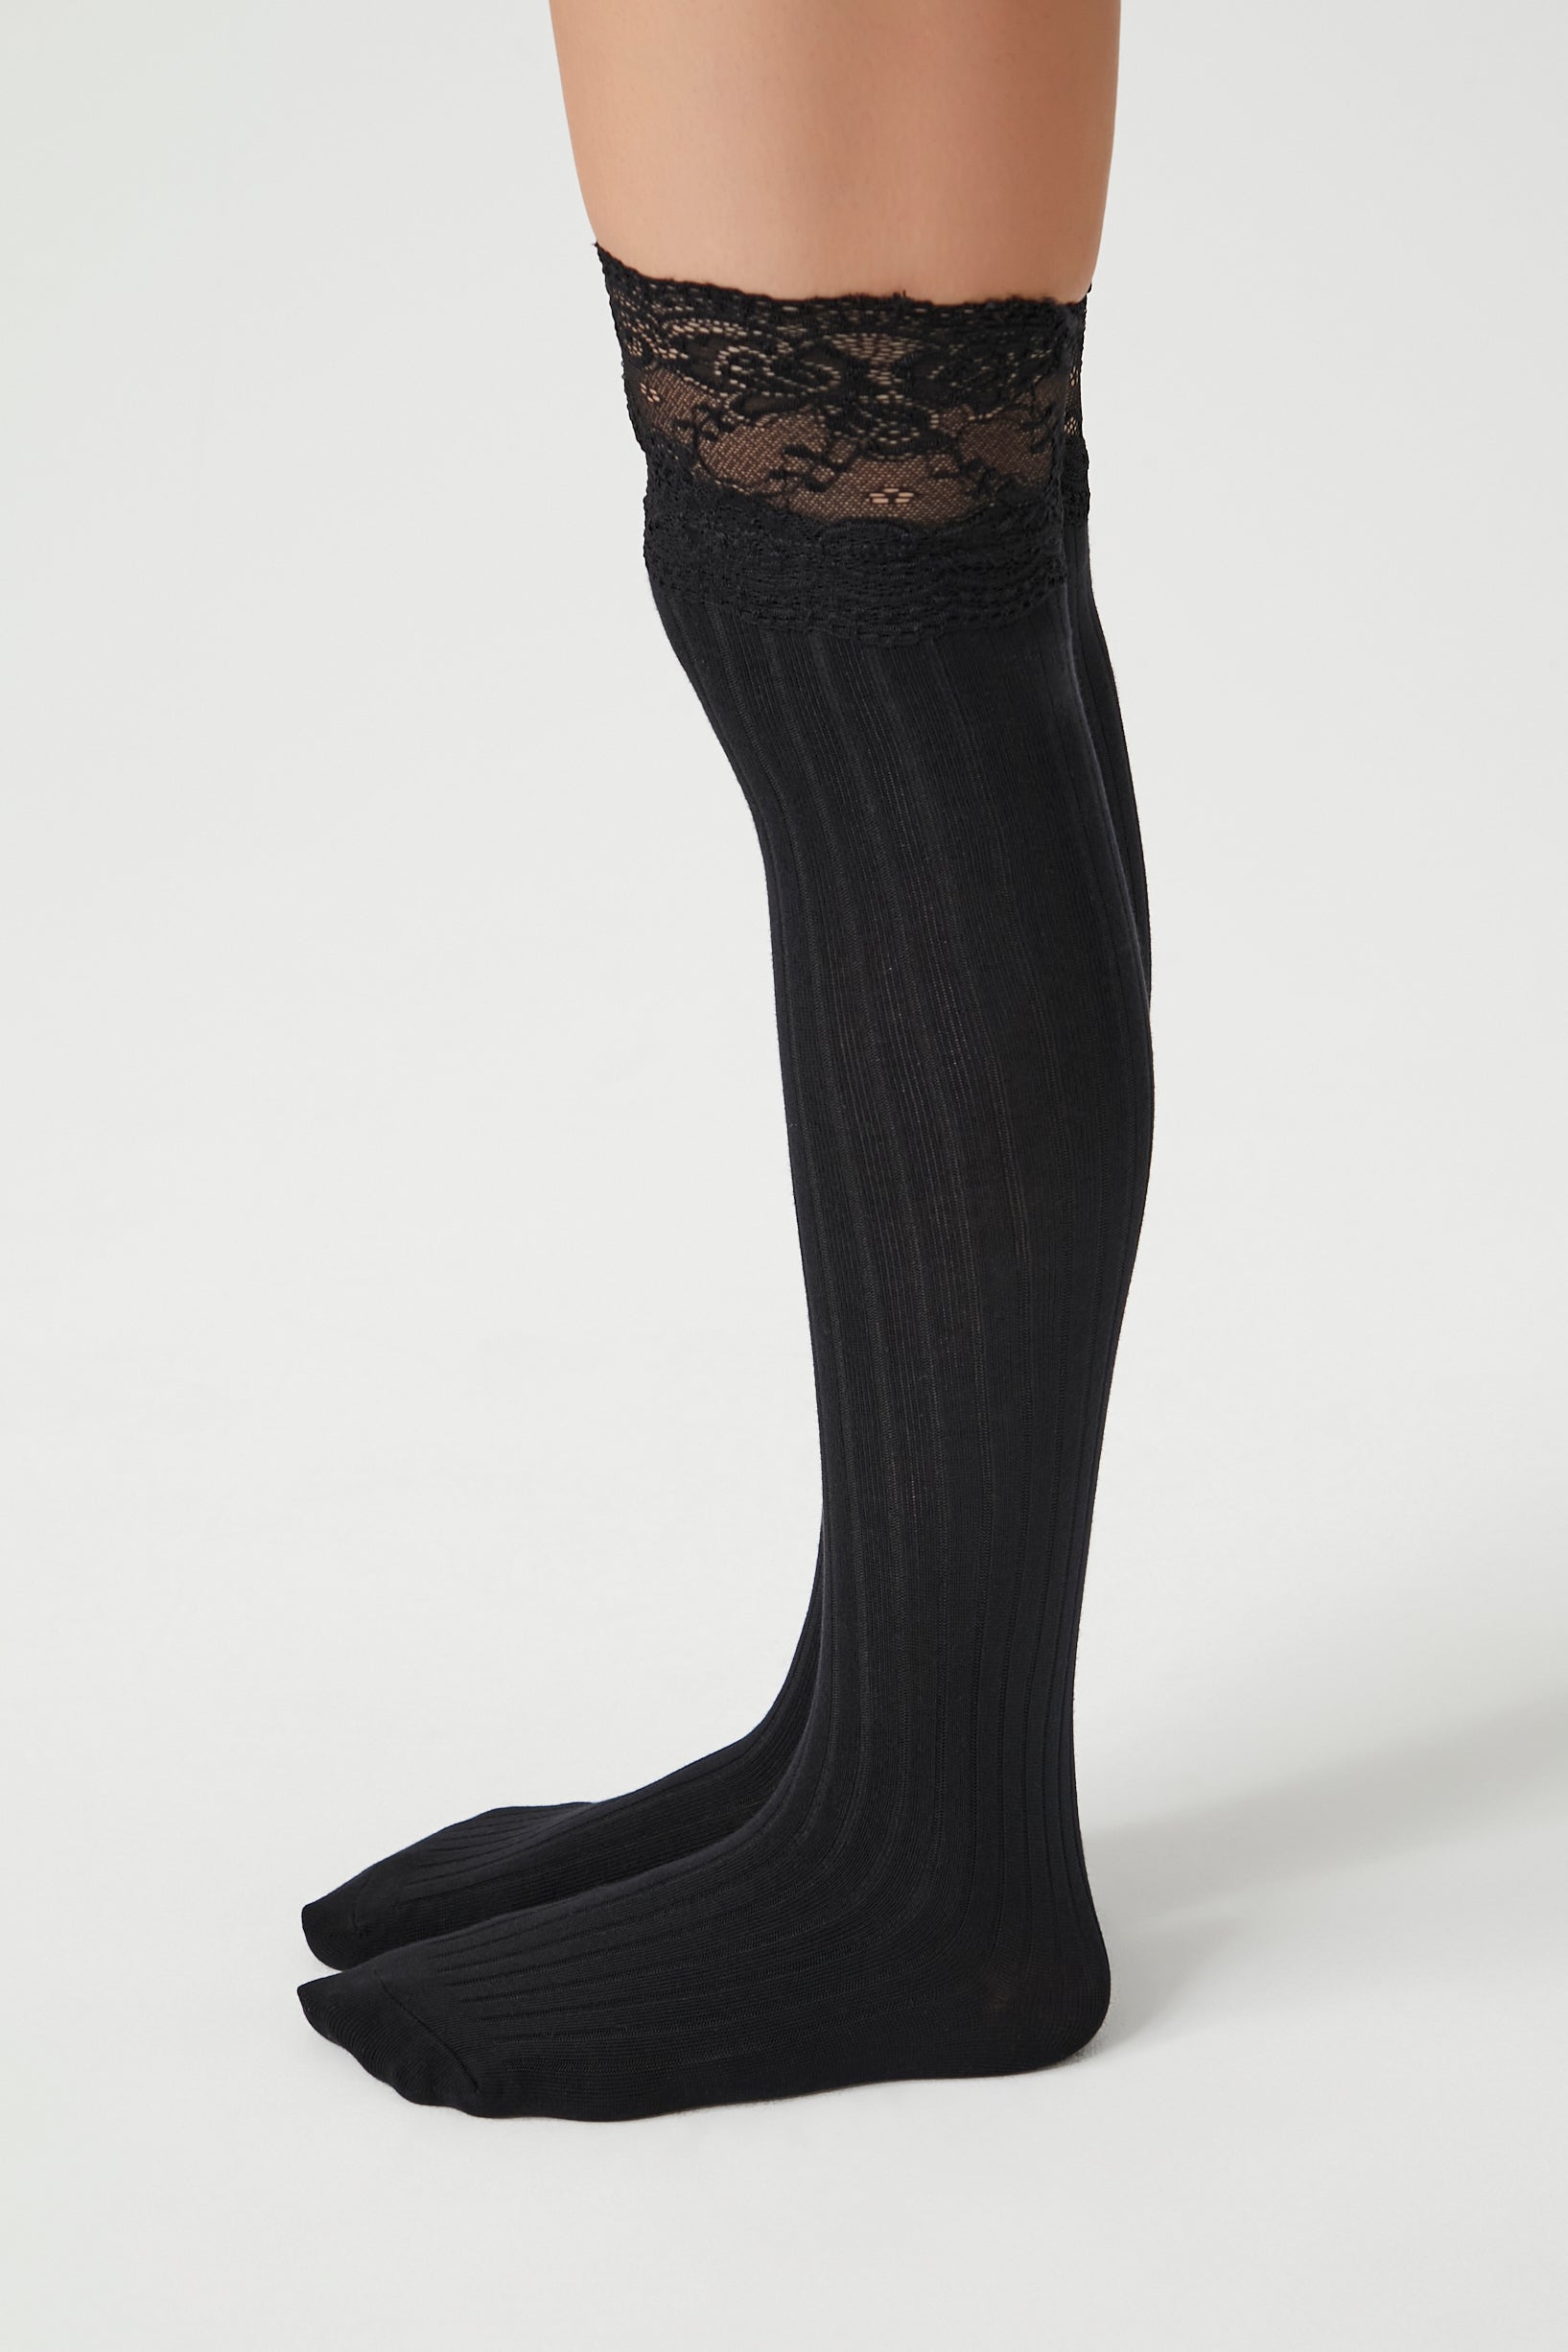 Black Lace-Trim Over-the-Knee Socks 2